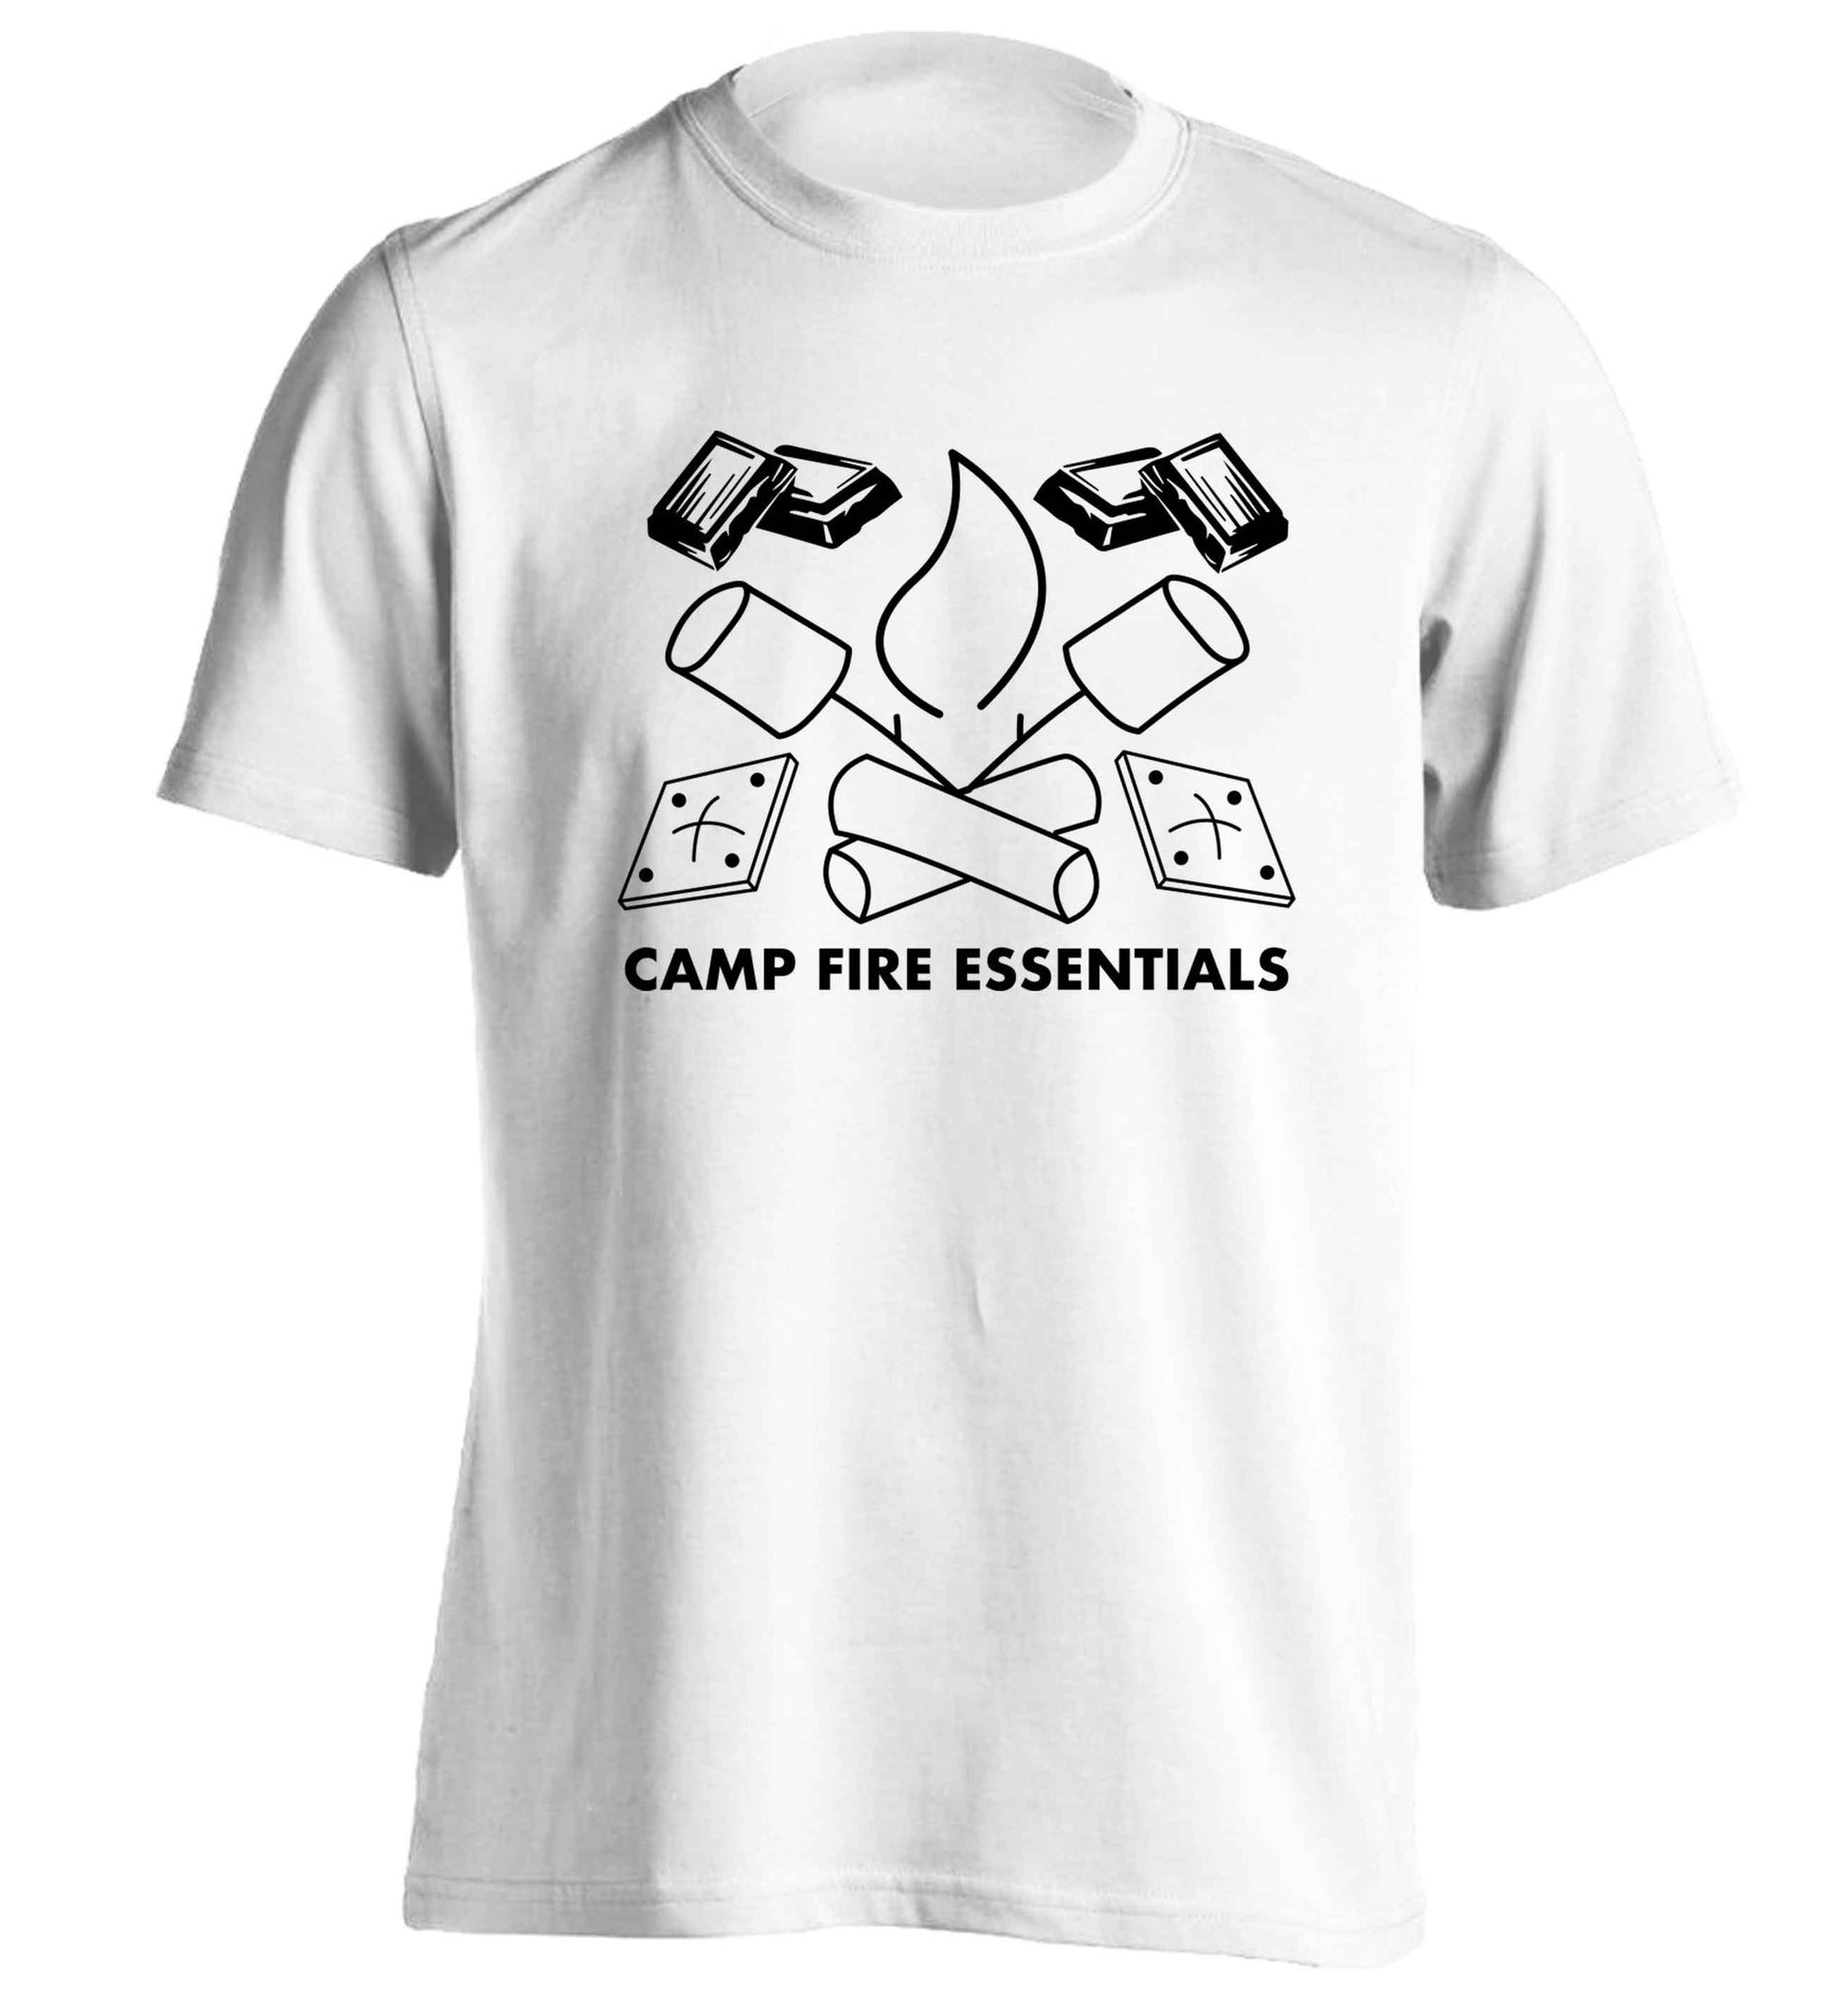 Campfire essentials adults unisex white Tshirt 2XL